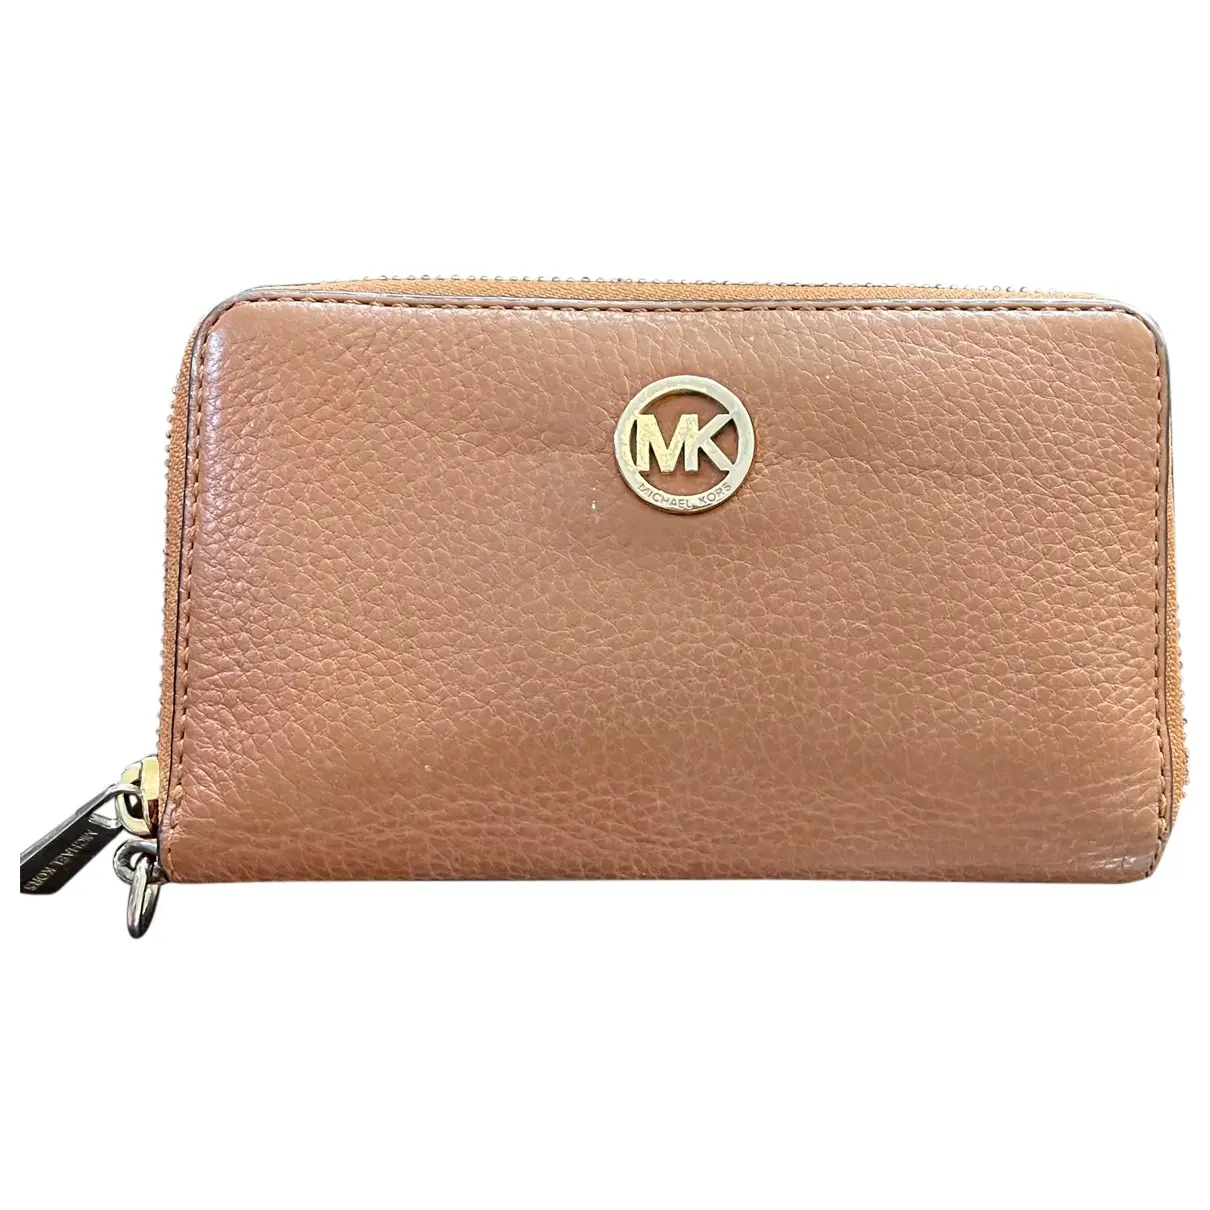 Leather wallet Michael Kors